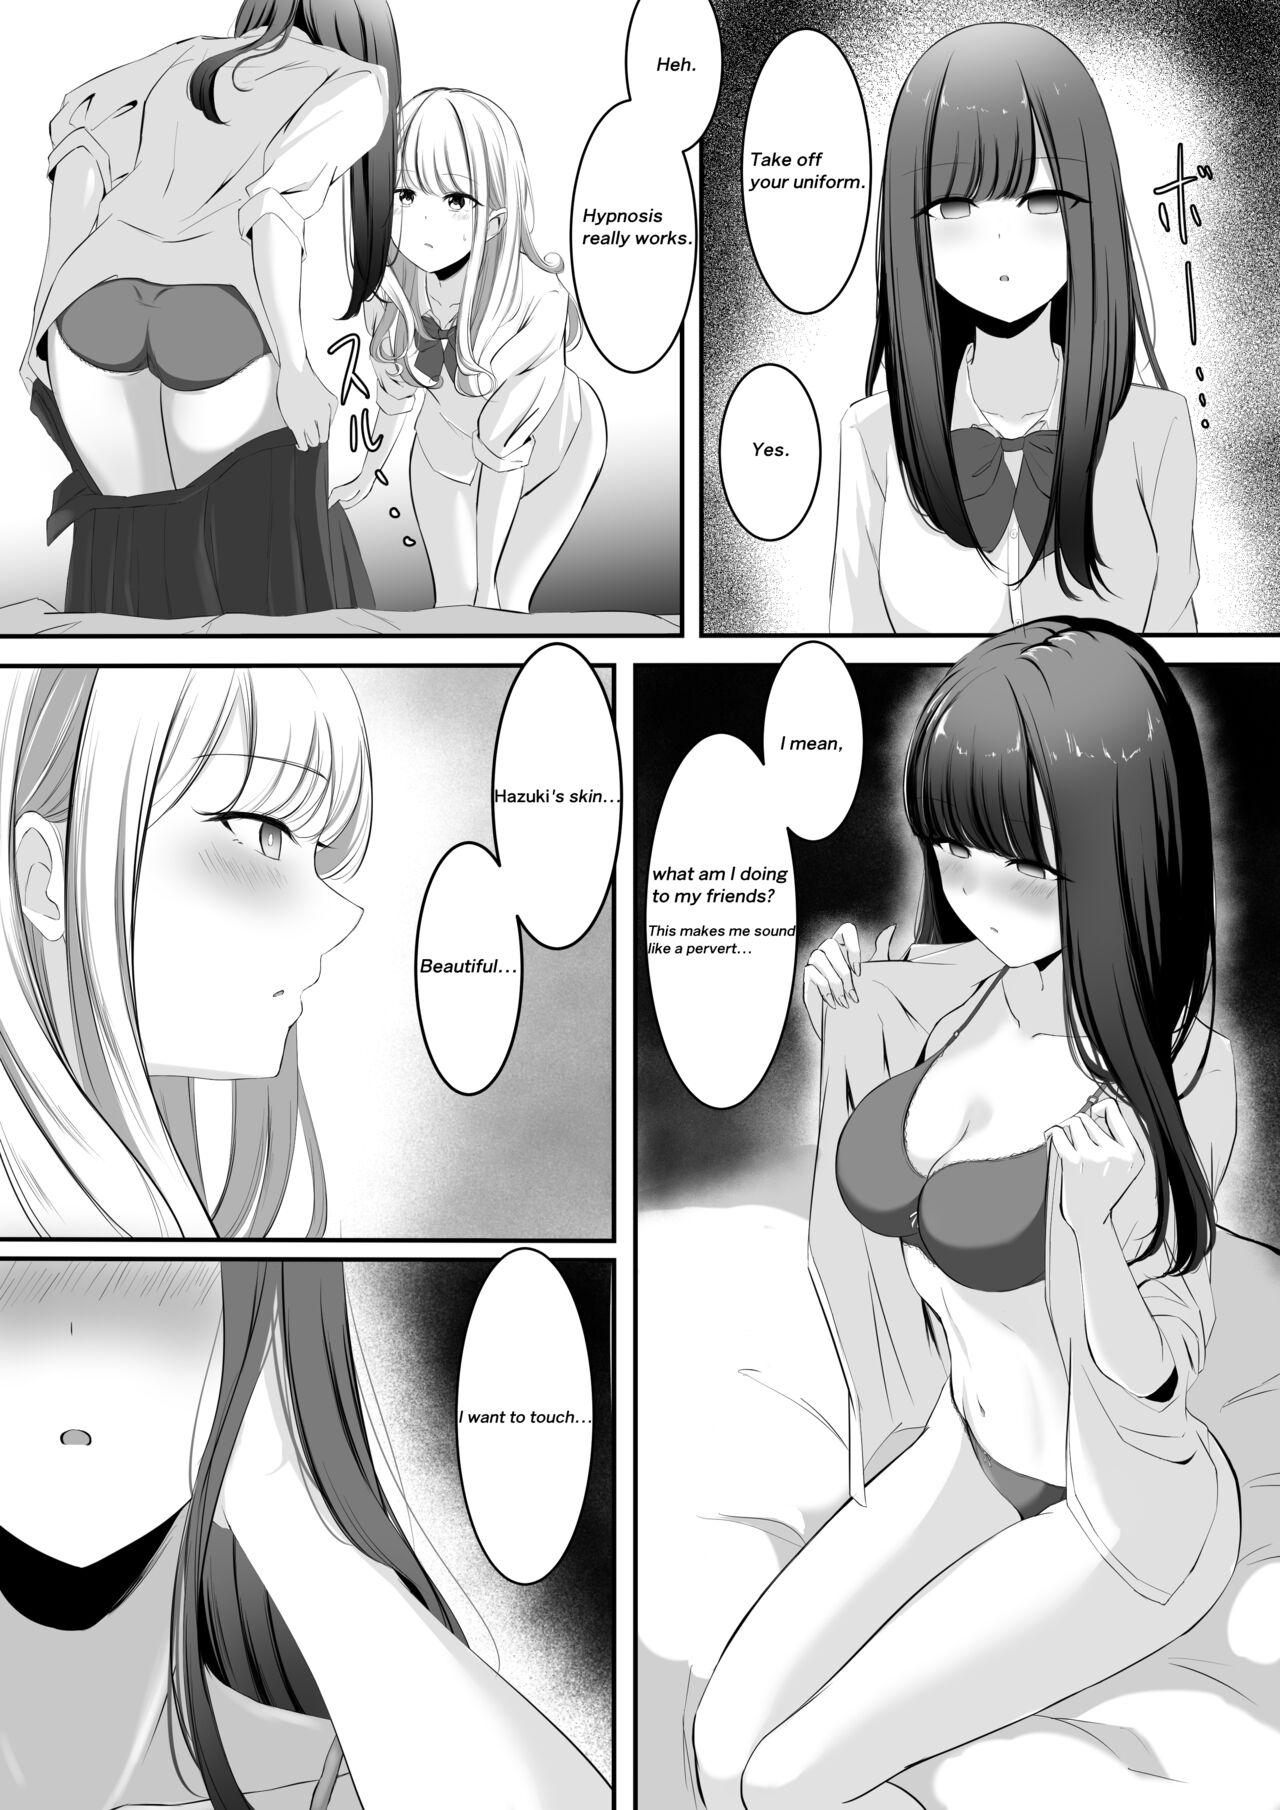 Yuri comic Part 1 and 2. 3